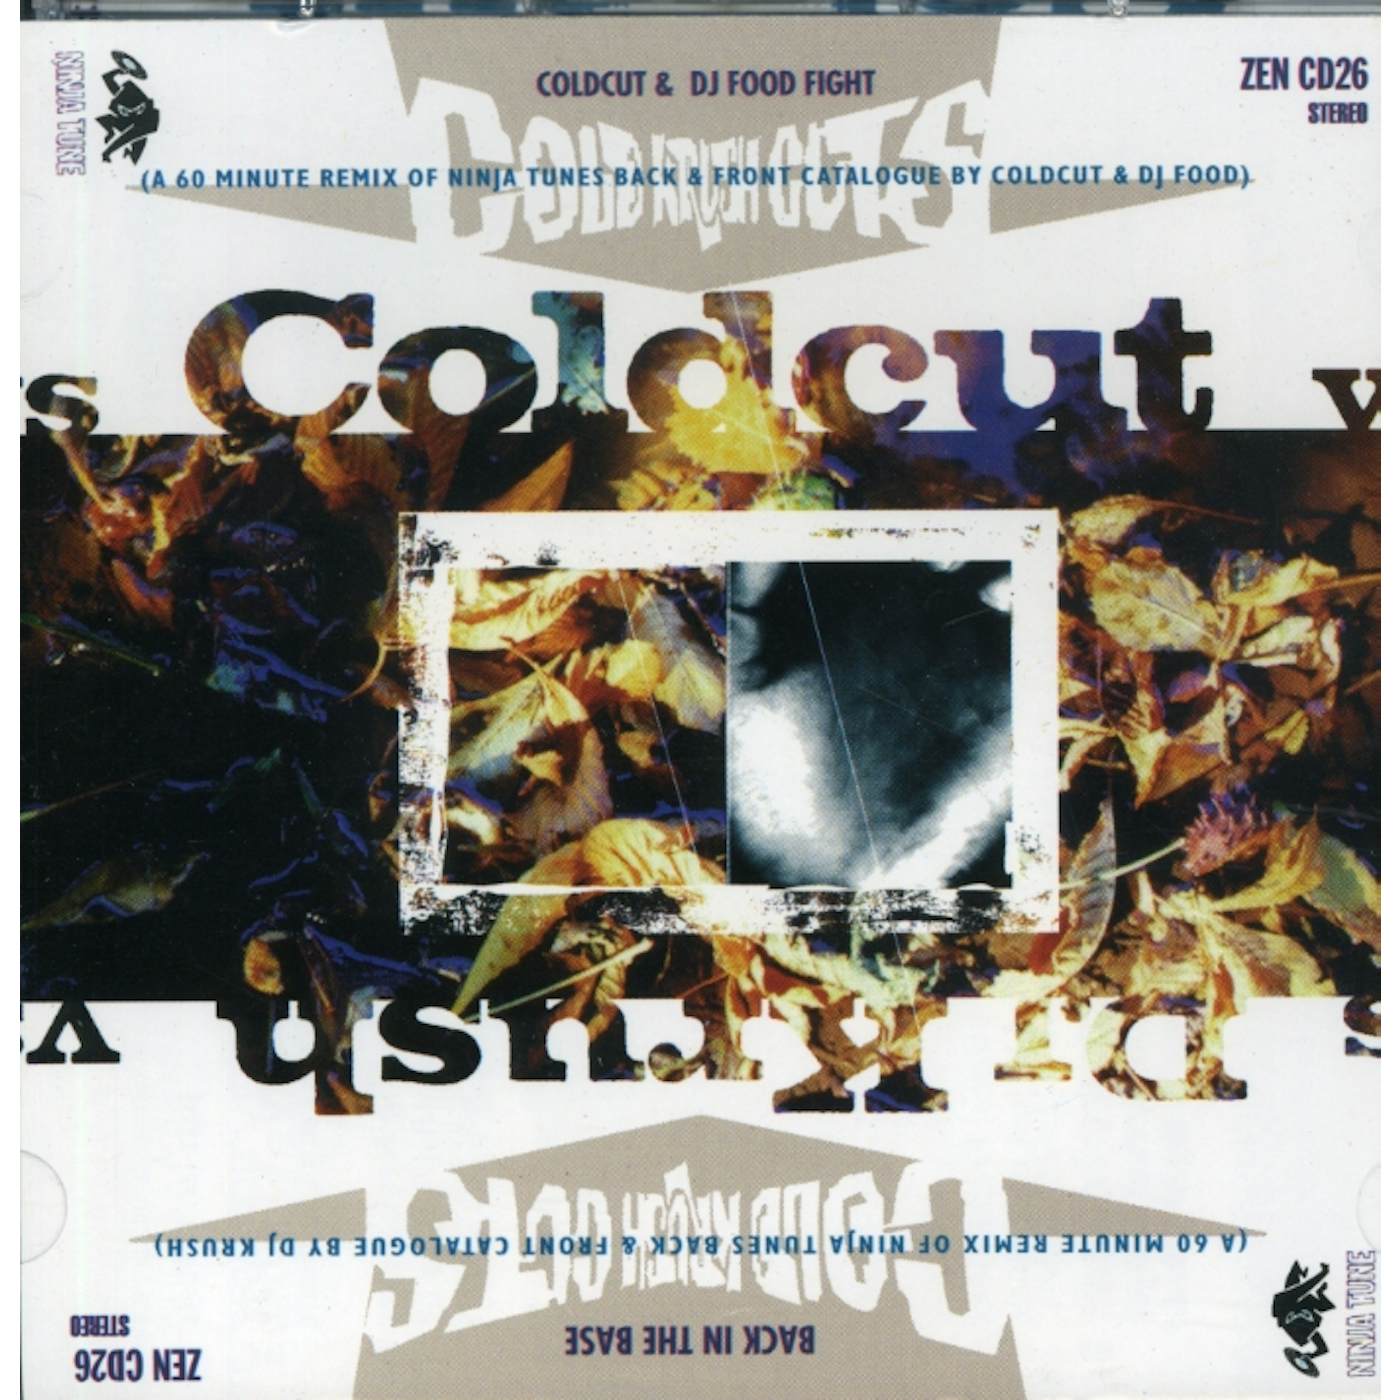 COLD KRUSH CUTS / VARIOUS   COLD KRUSH CUTS / VARIOUS (2CD SET) CD